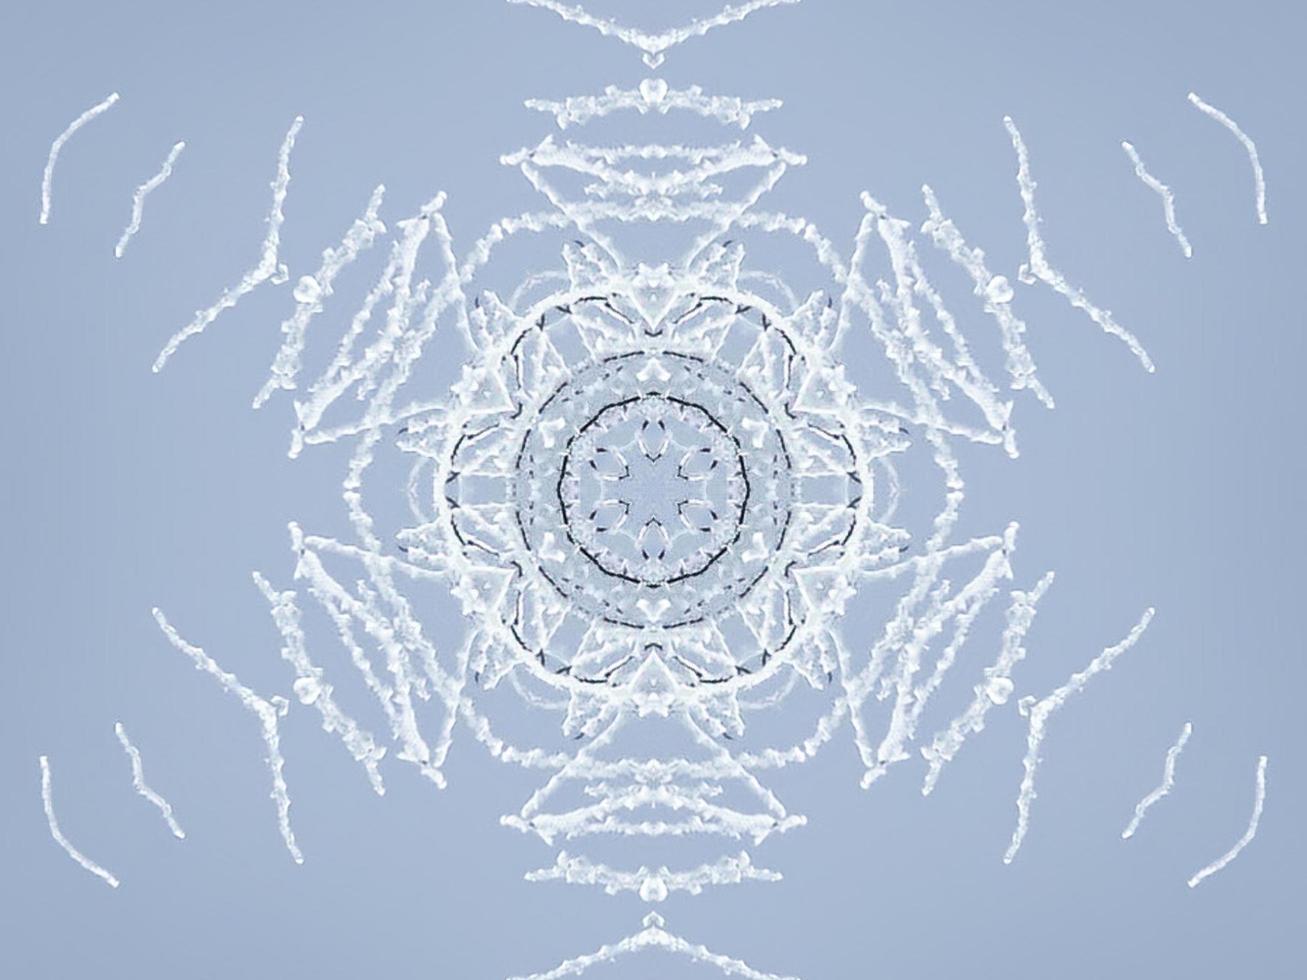 White snow kaleidoscope pattern. Abstract background with winter theme. Free photo. photo